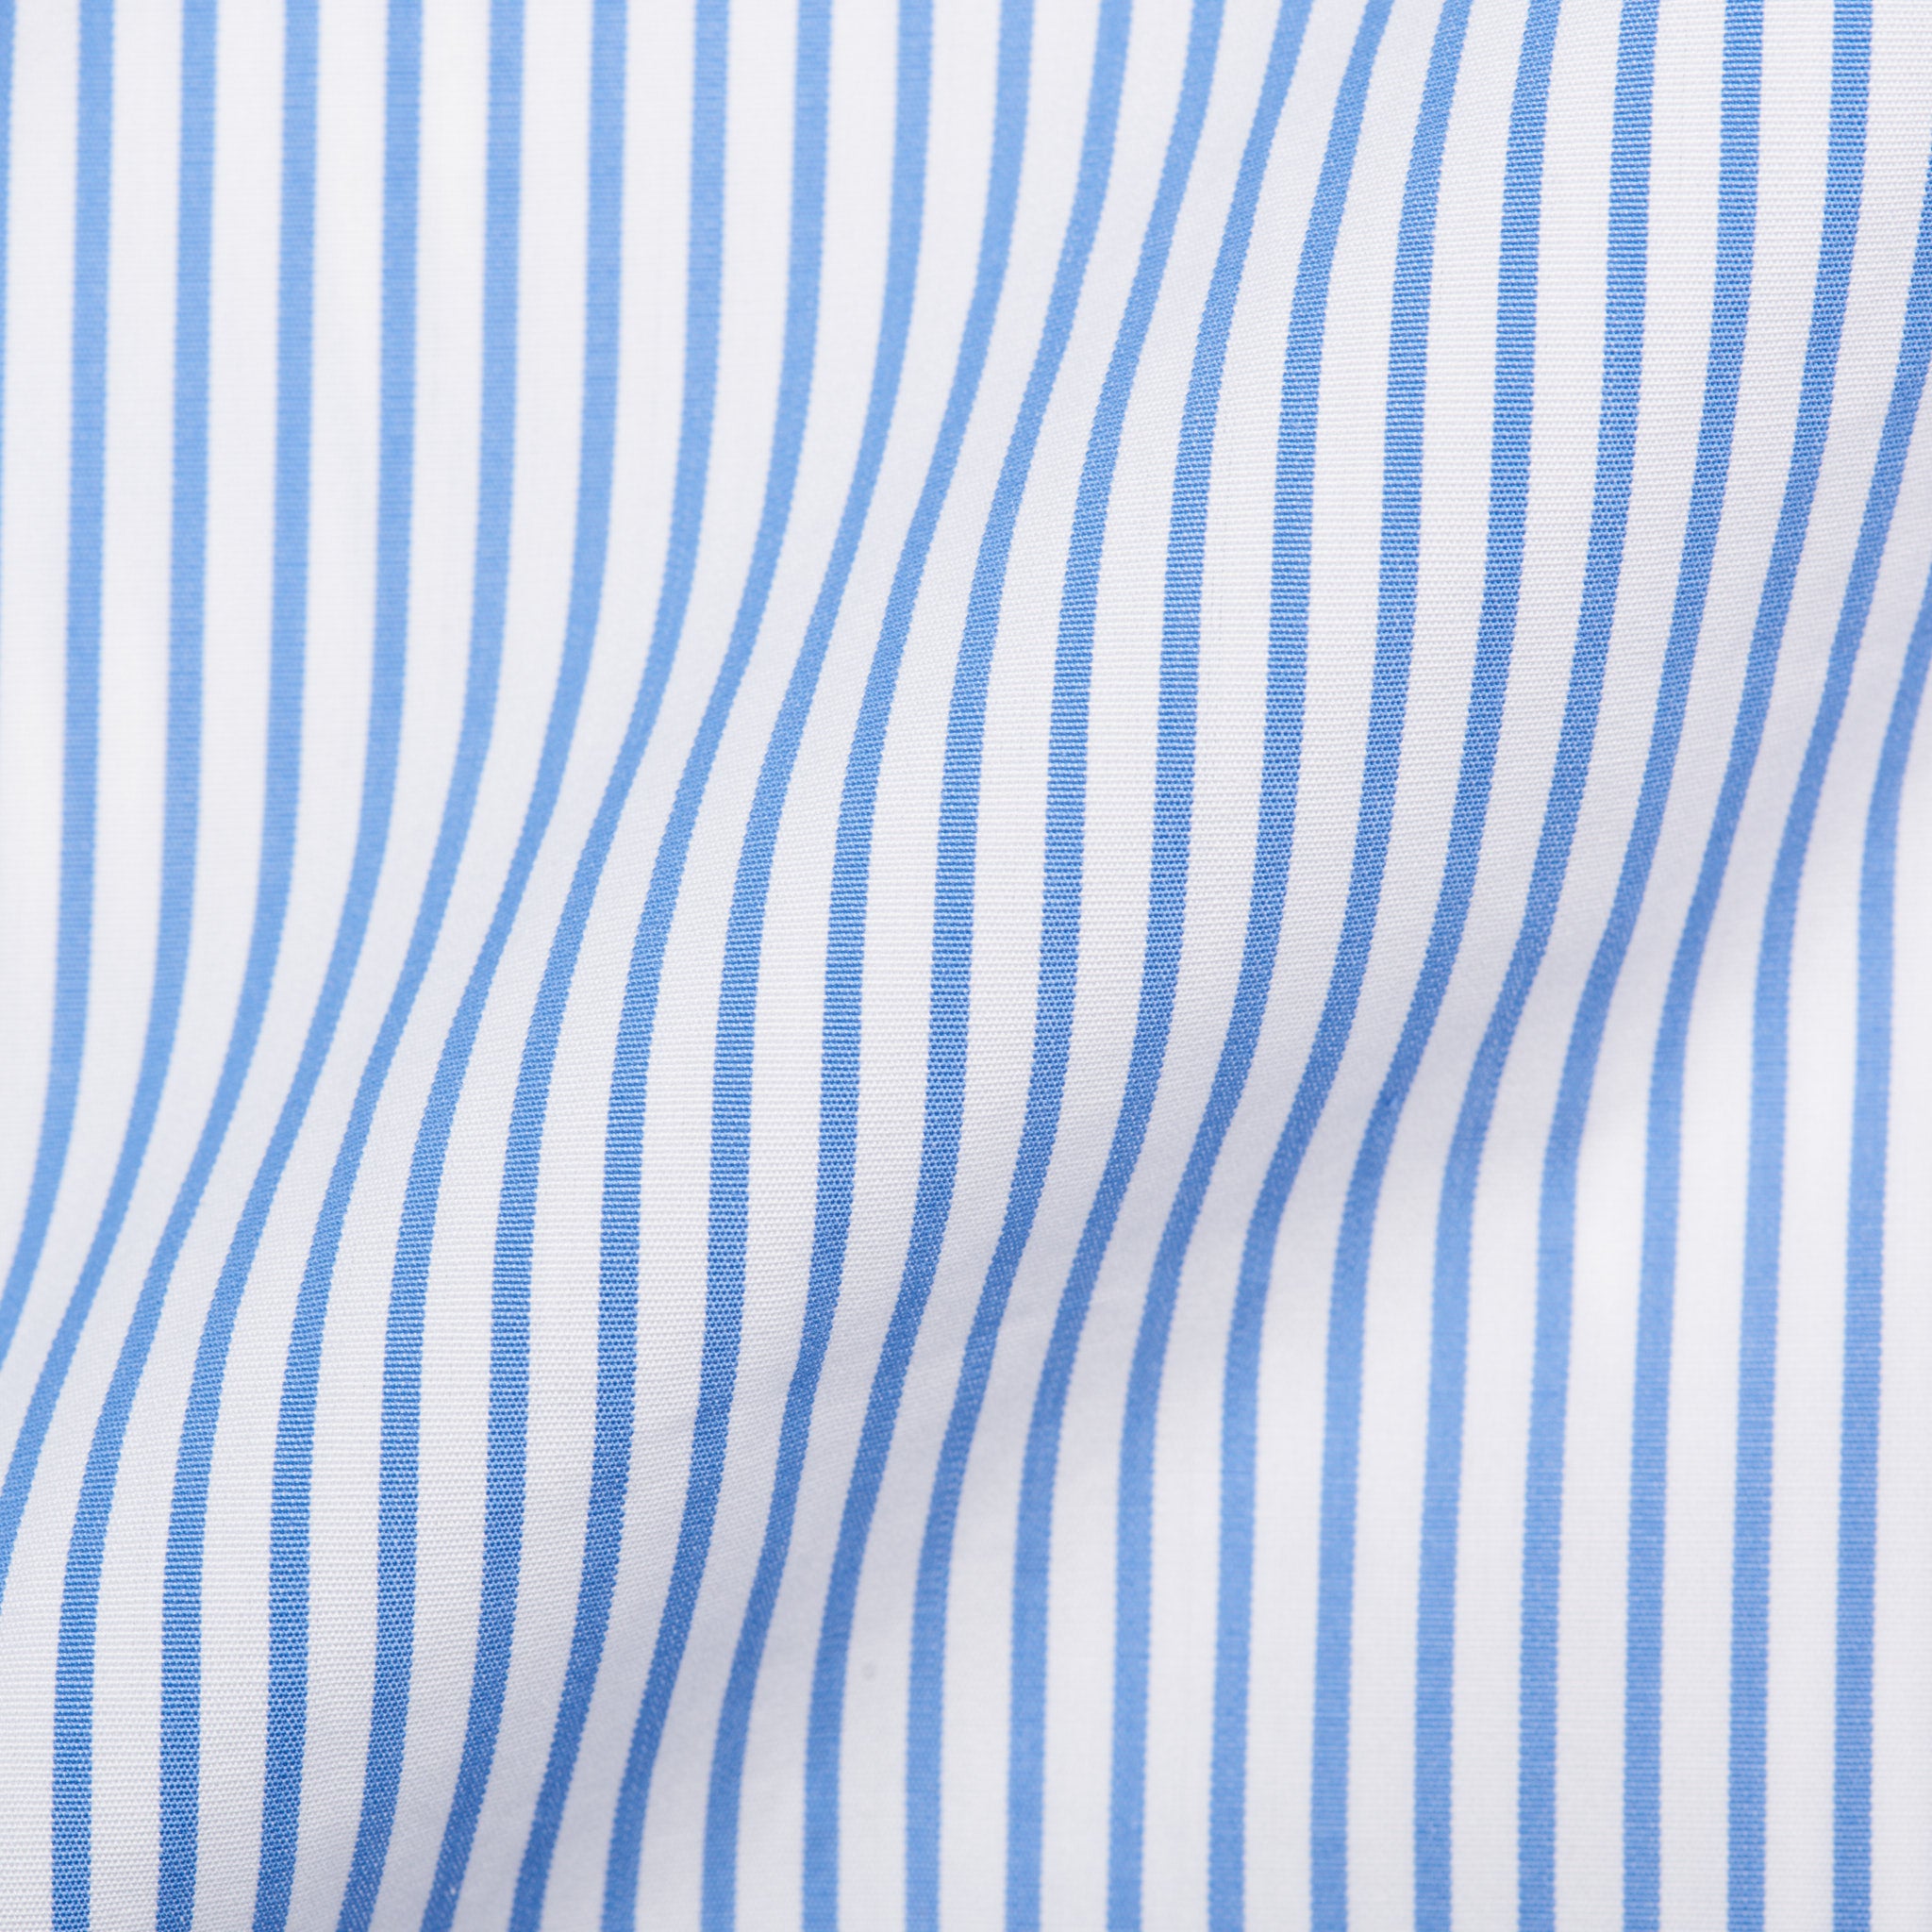 BESPOKE ATHENS Handmade Blue Striped Poplin Cotton Dress Shirt EU 45 US 18 BESPOKE ATHENS